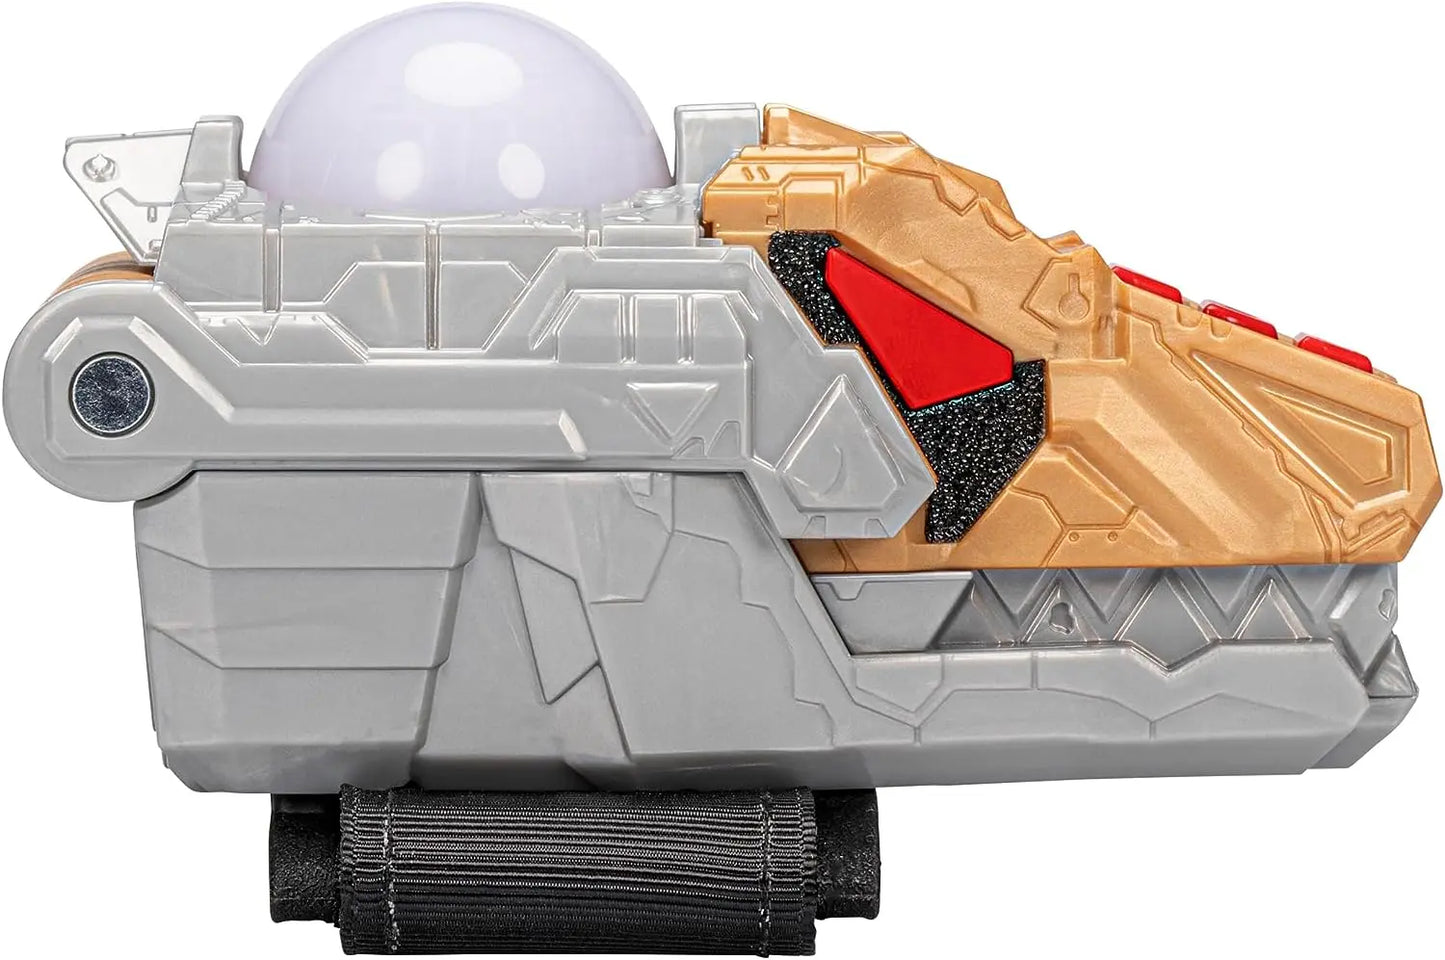 jouets pour enfant Hasbro Power Ranger Dino Fury Gold Blade Blaster Hasbro